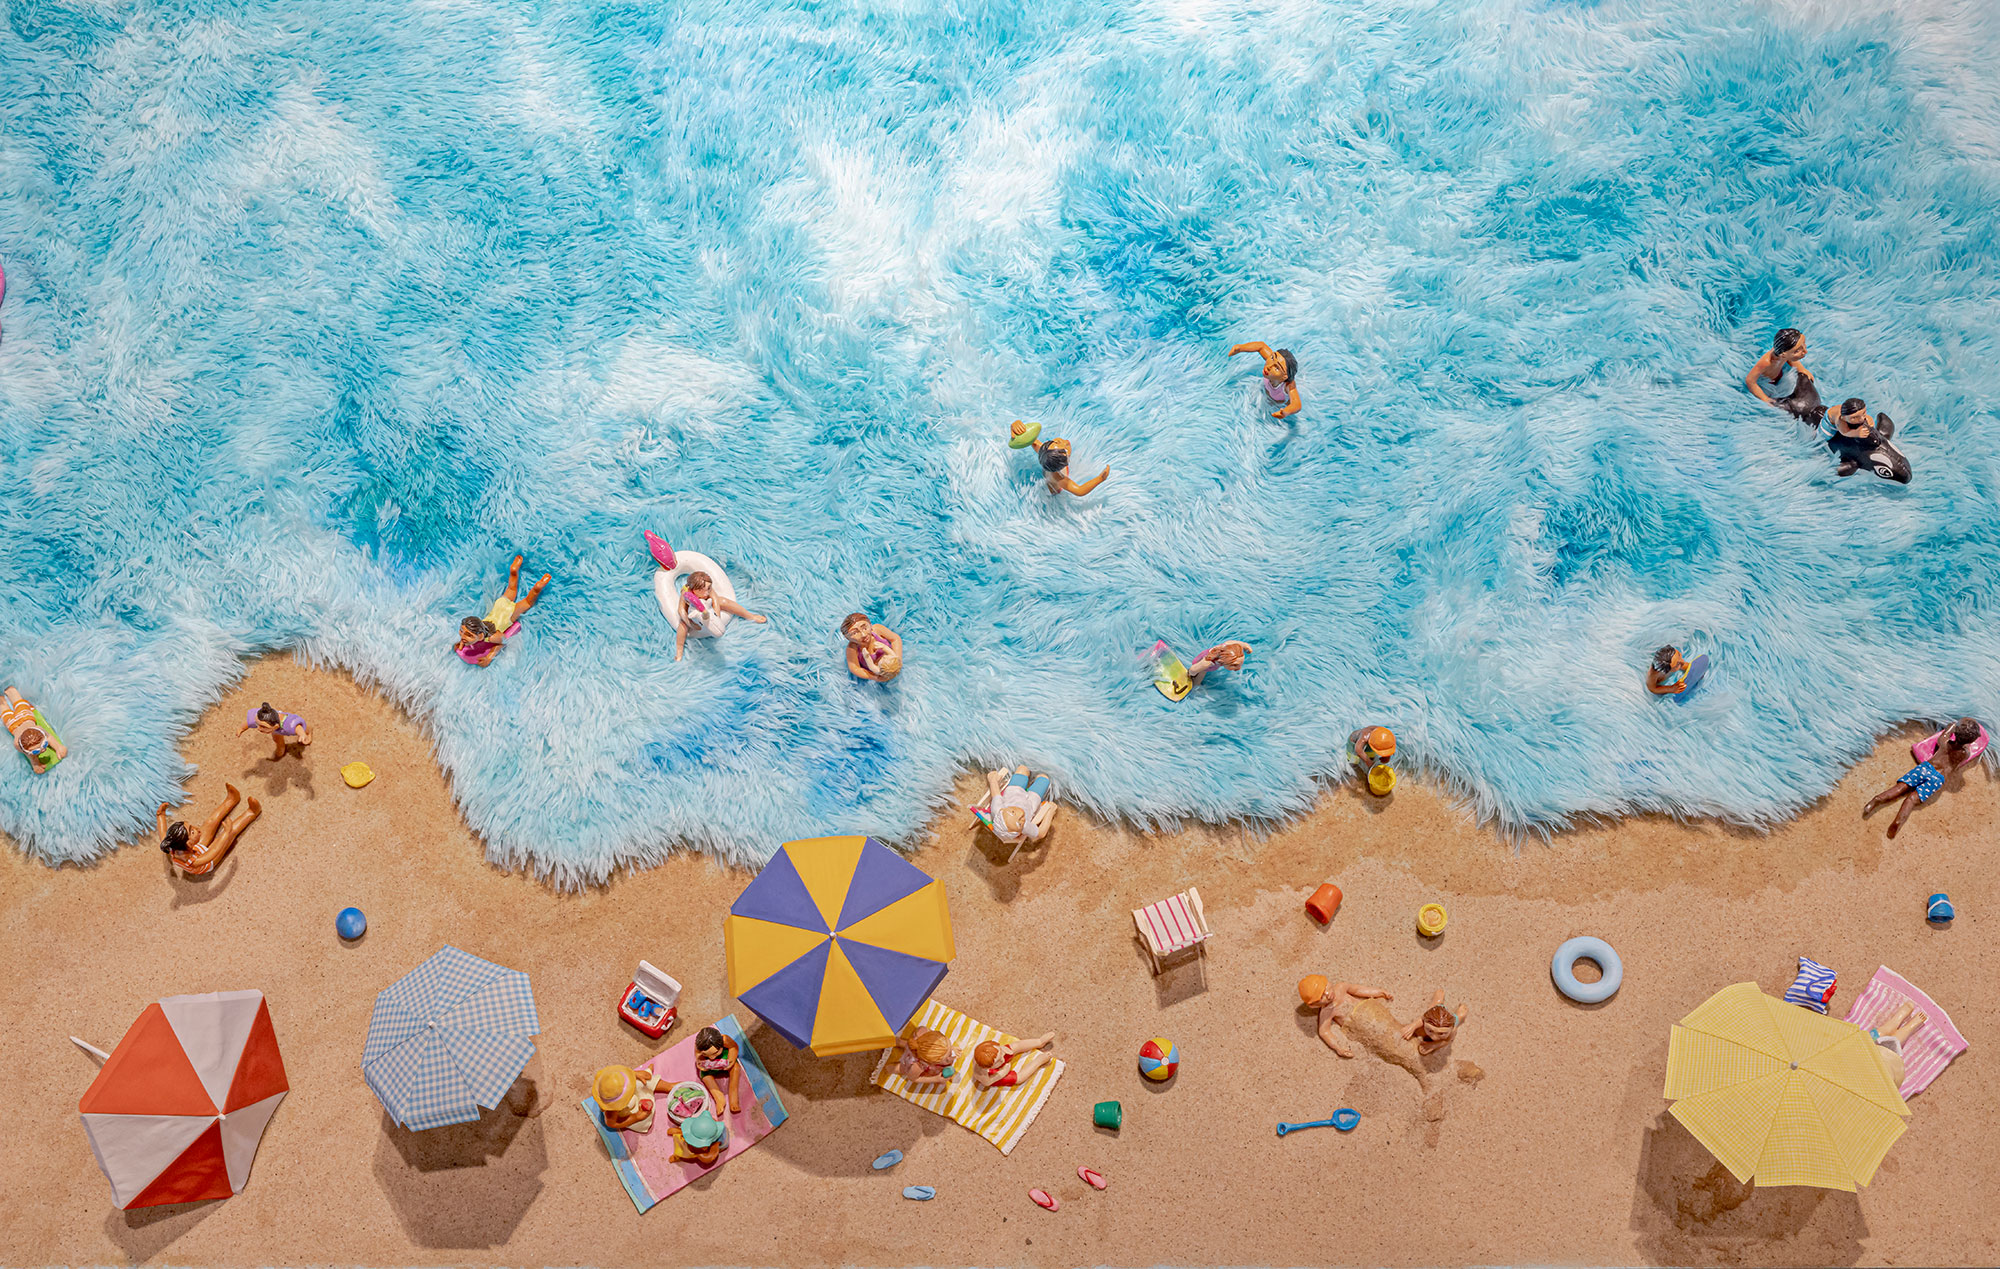 Miniature polymer clay figures arranged in a beach scene